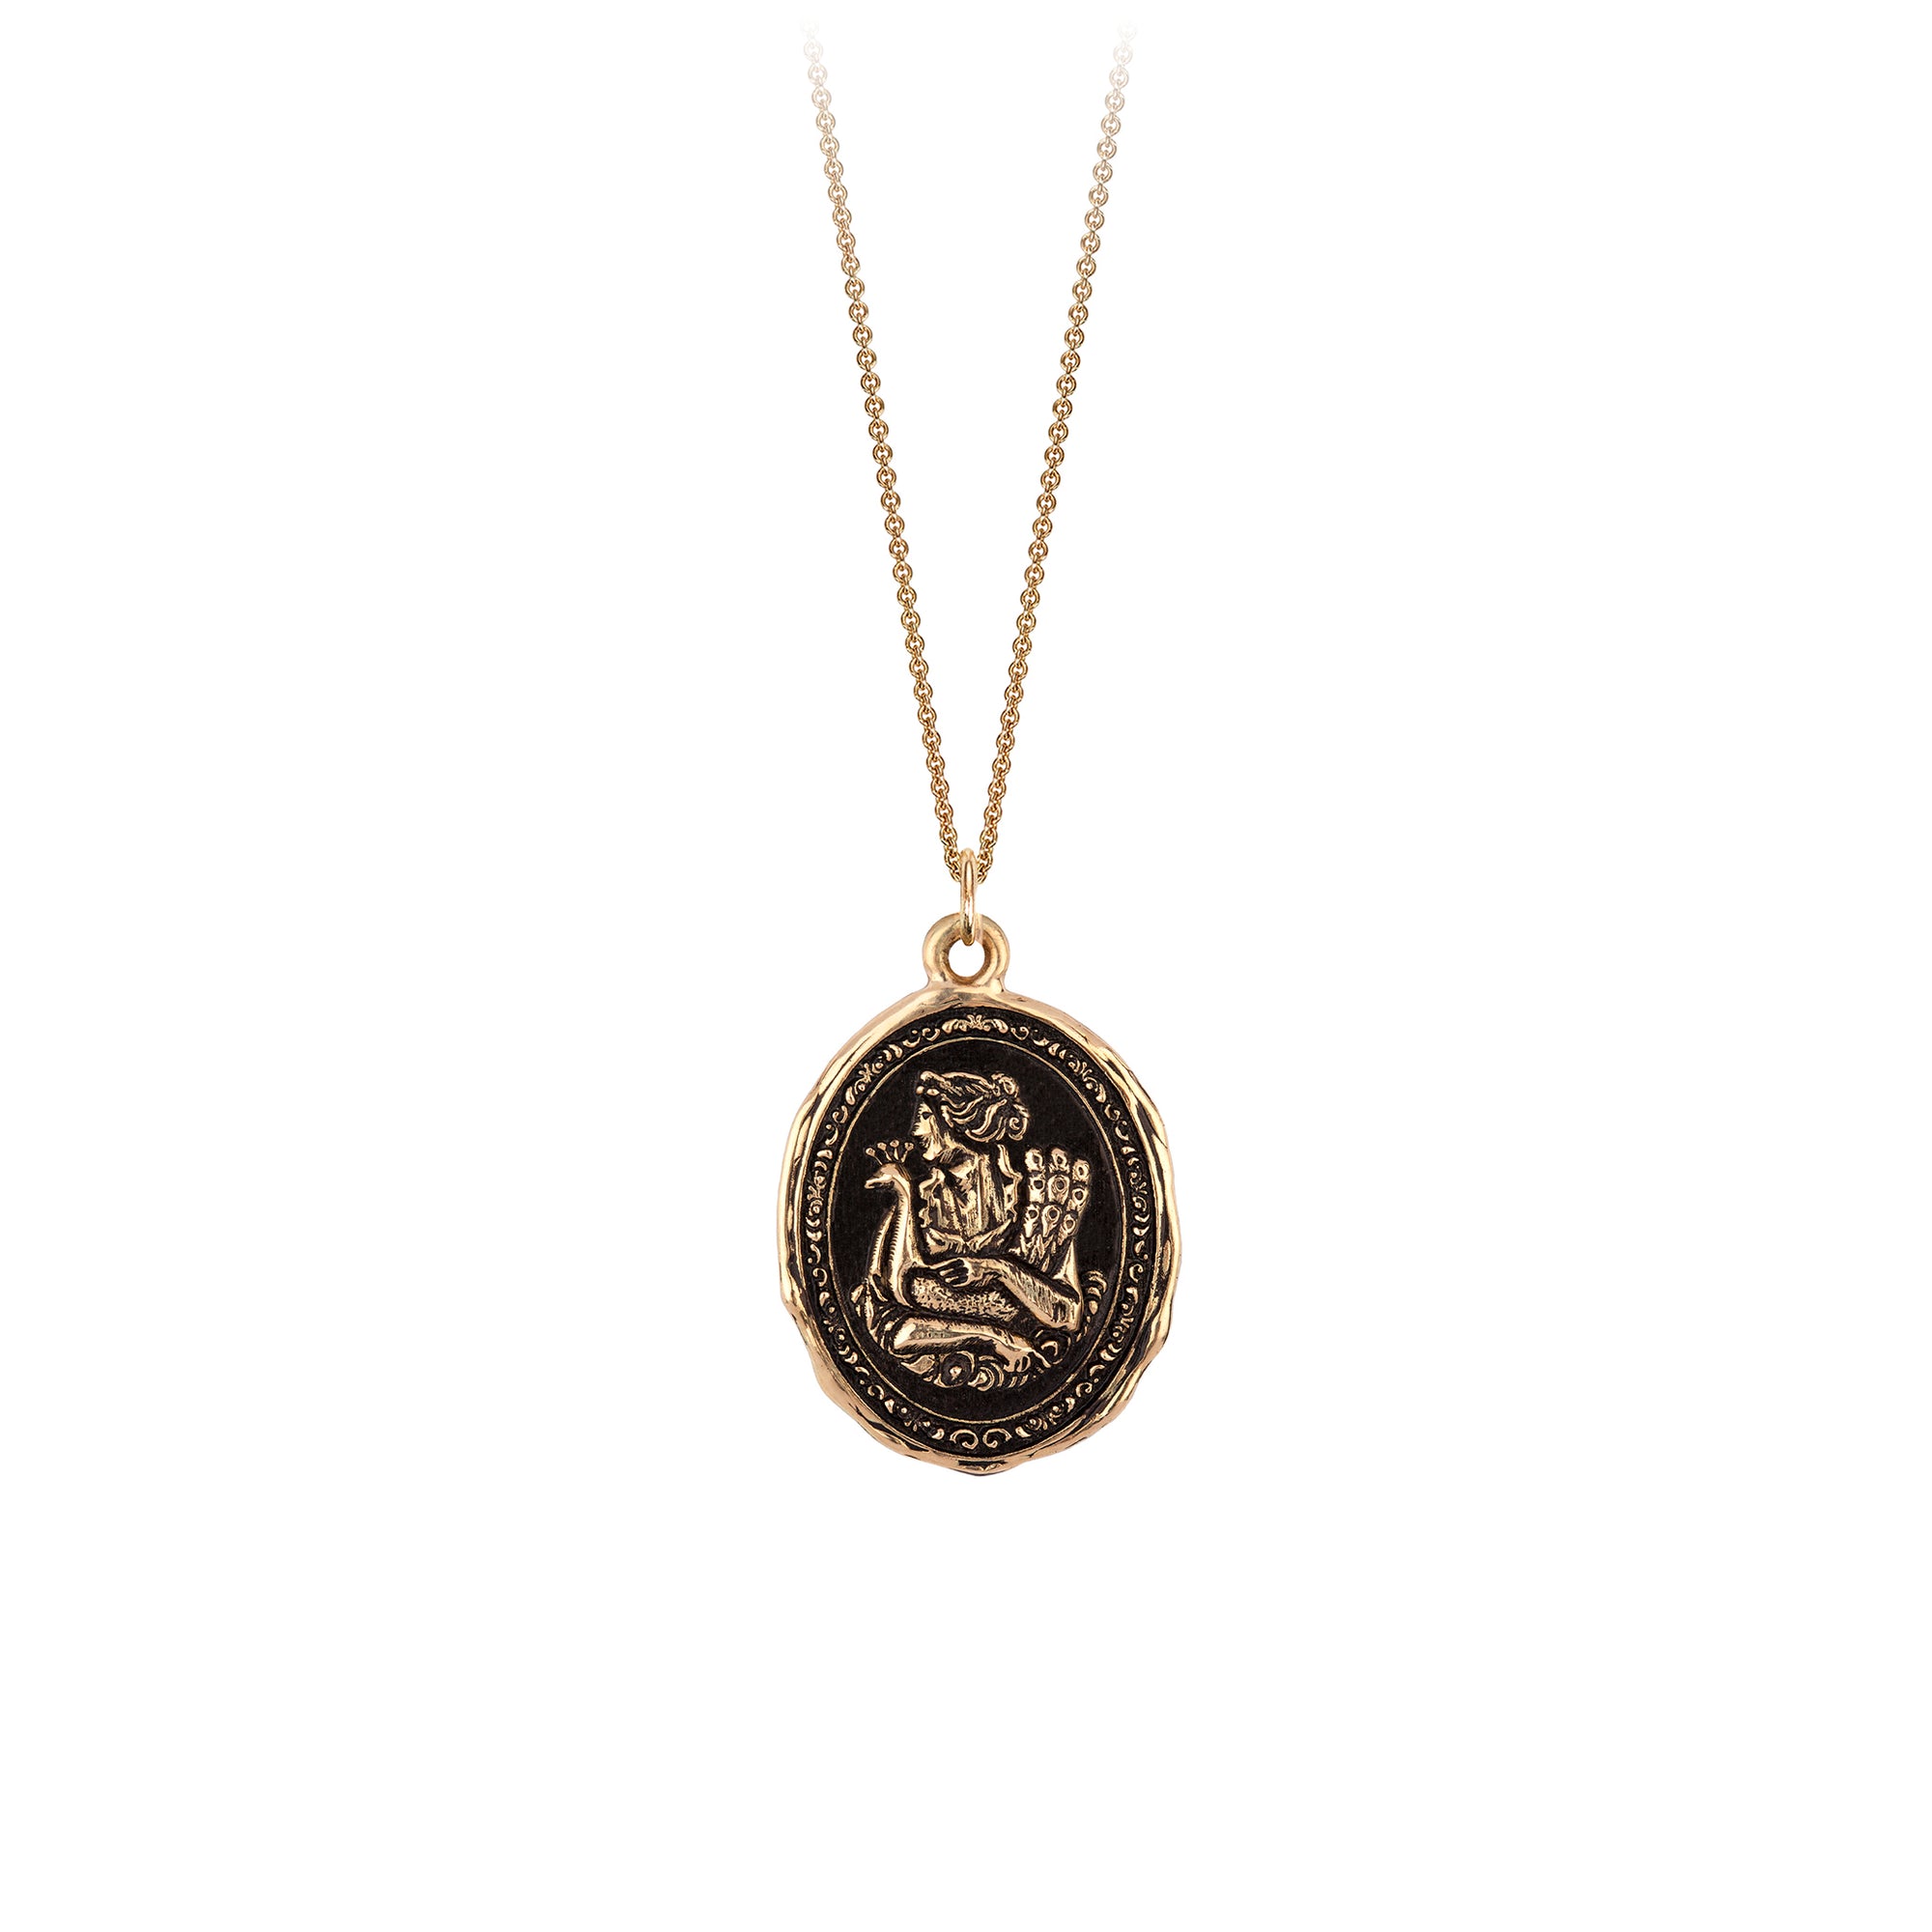 A 14k gold chain featuring our 14k gold Hera goddess talisman.